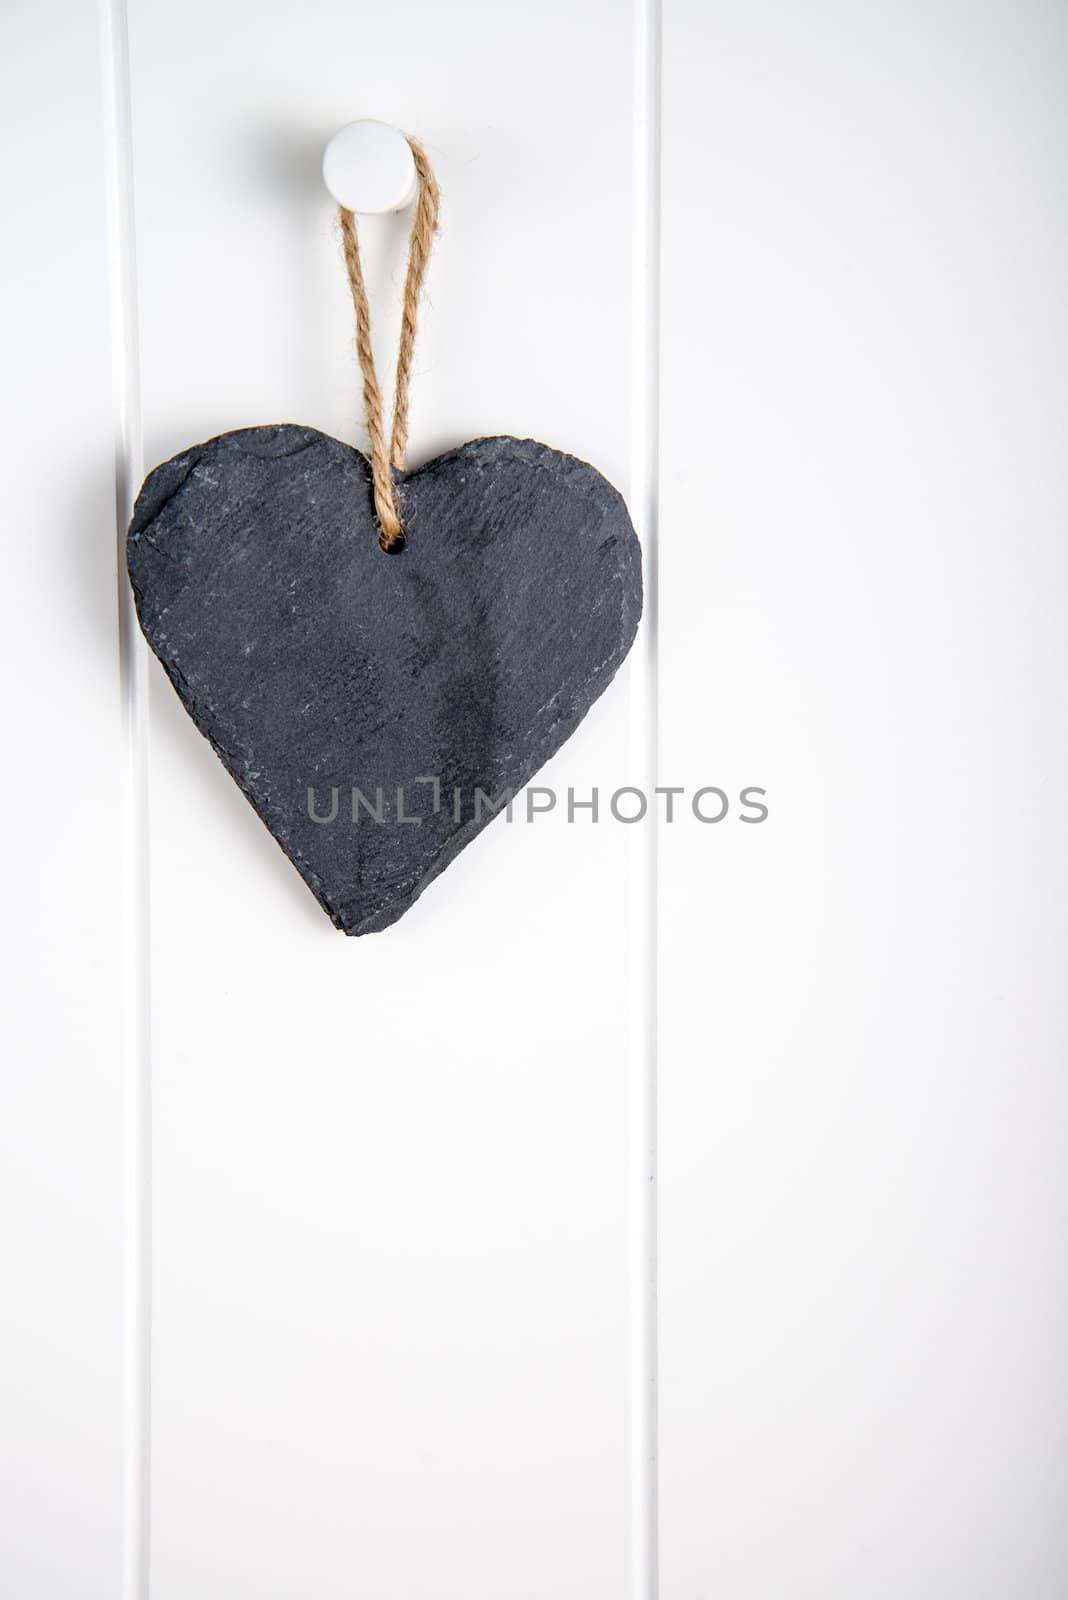 Black stone slate herath shape blank sign hanging on white wooden door